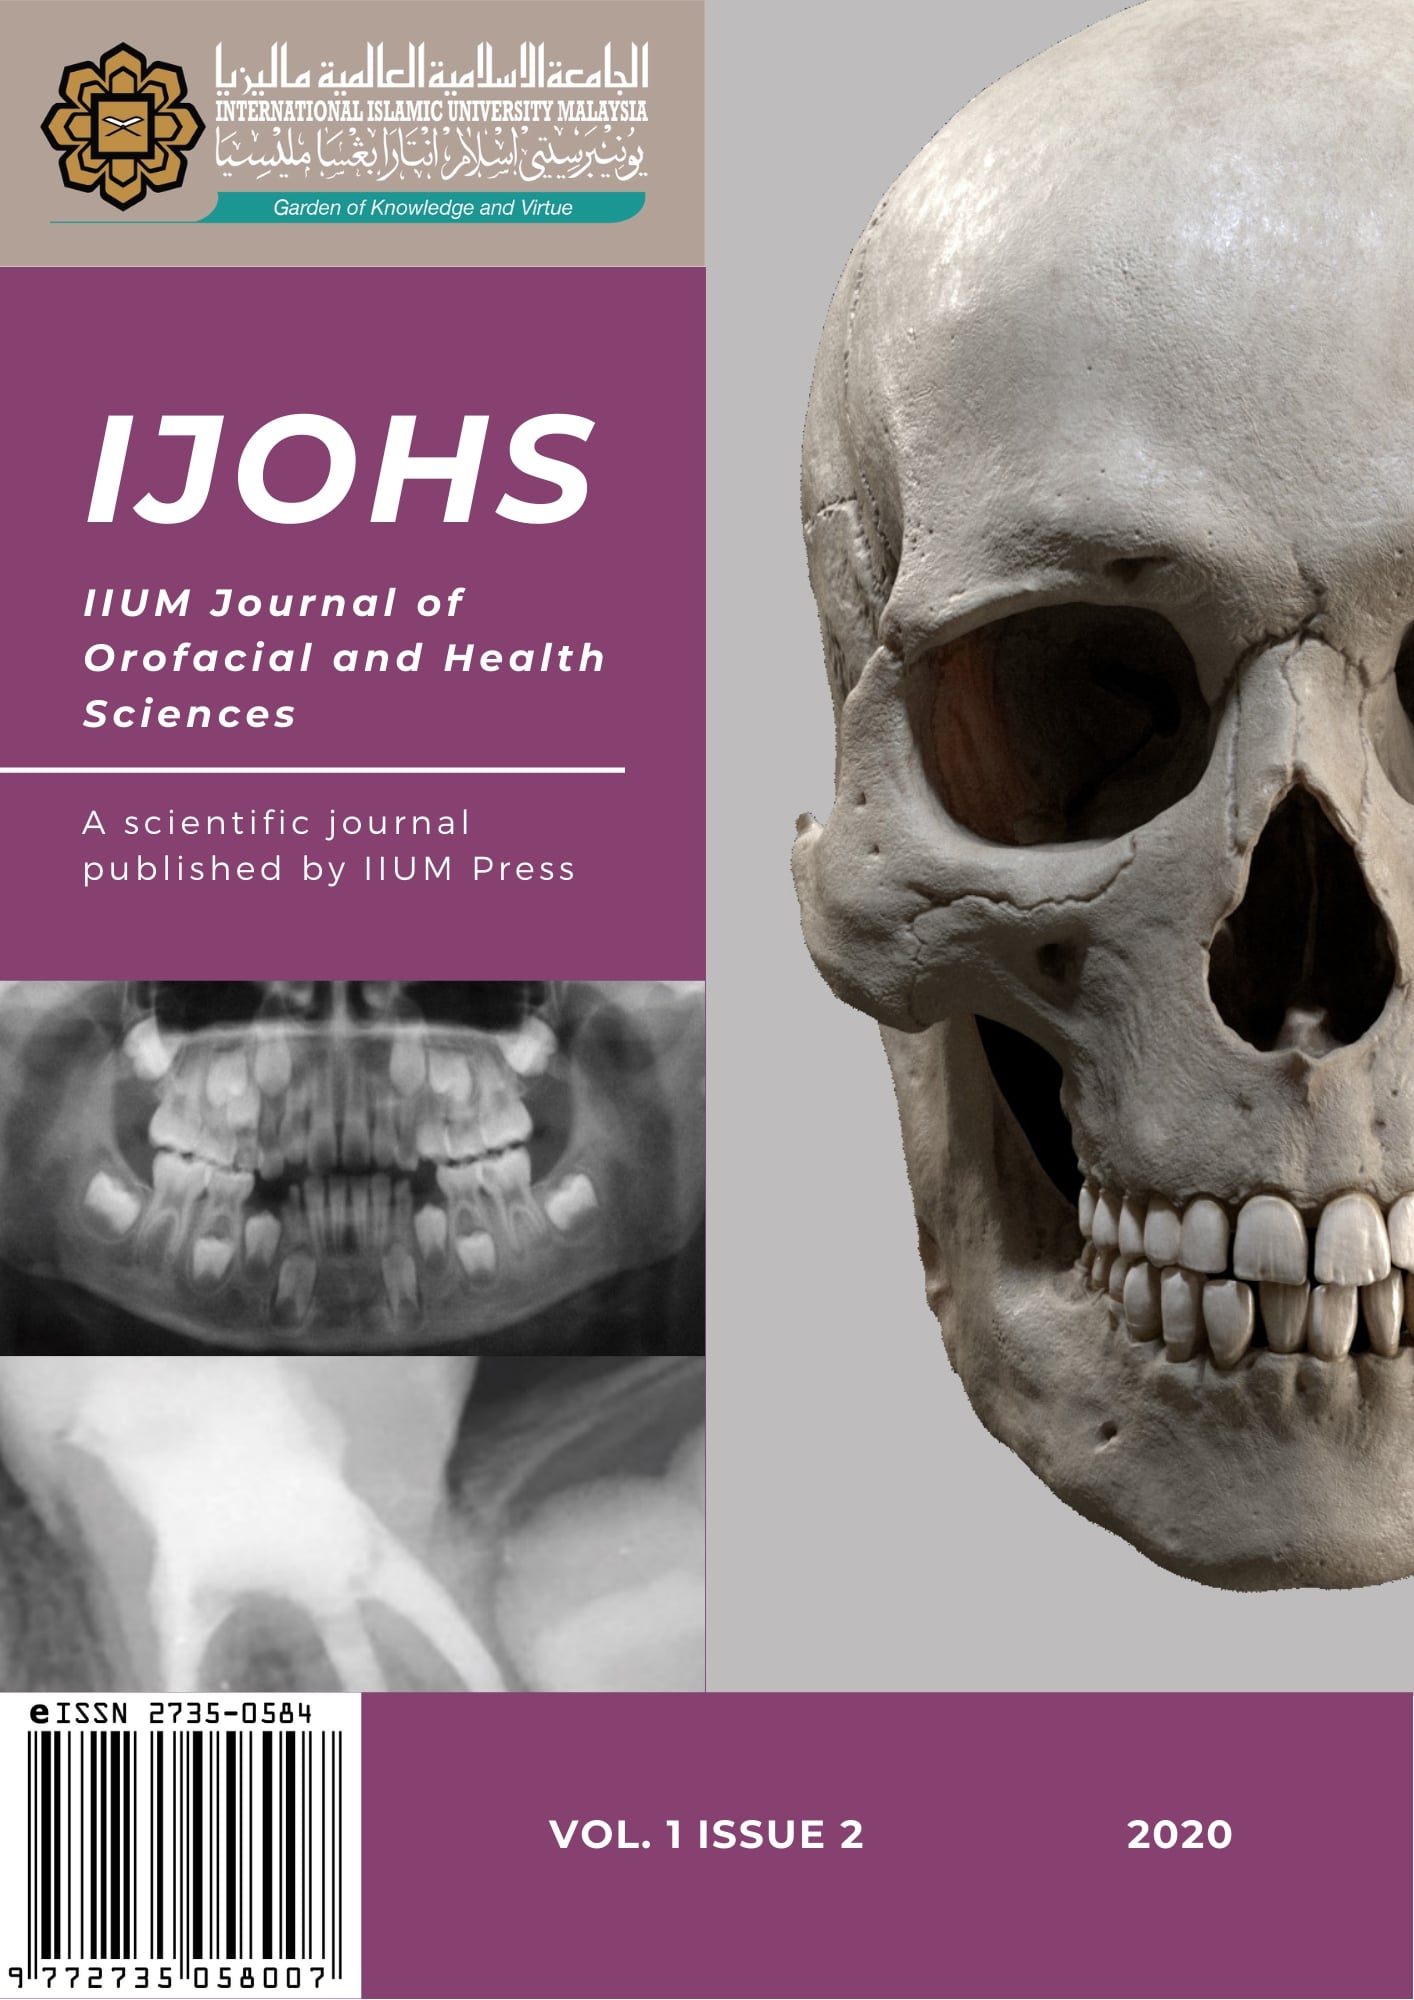 IIUM JOURNAL OF OROFACIAL AND HEALTH SCIENCES